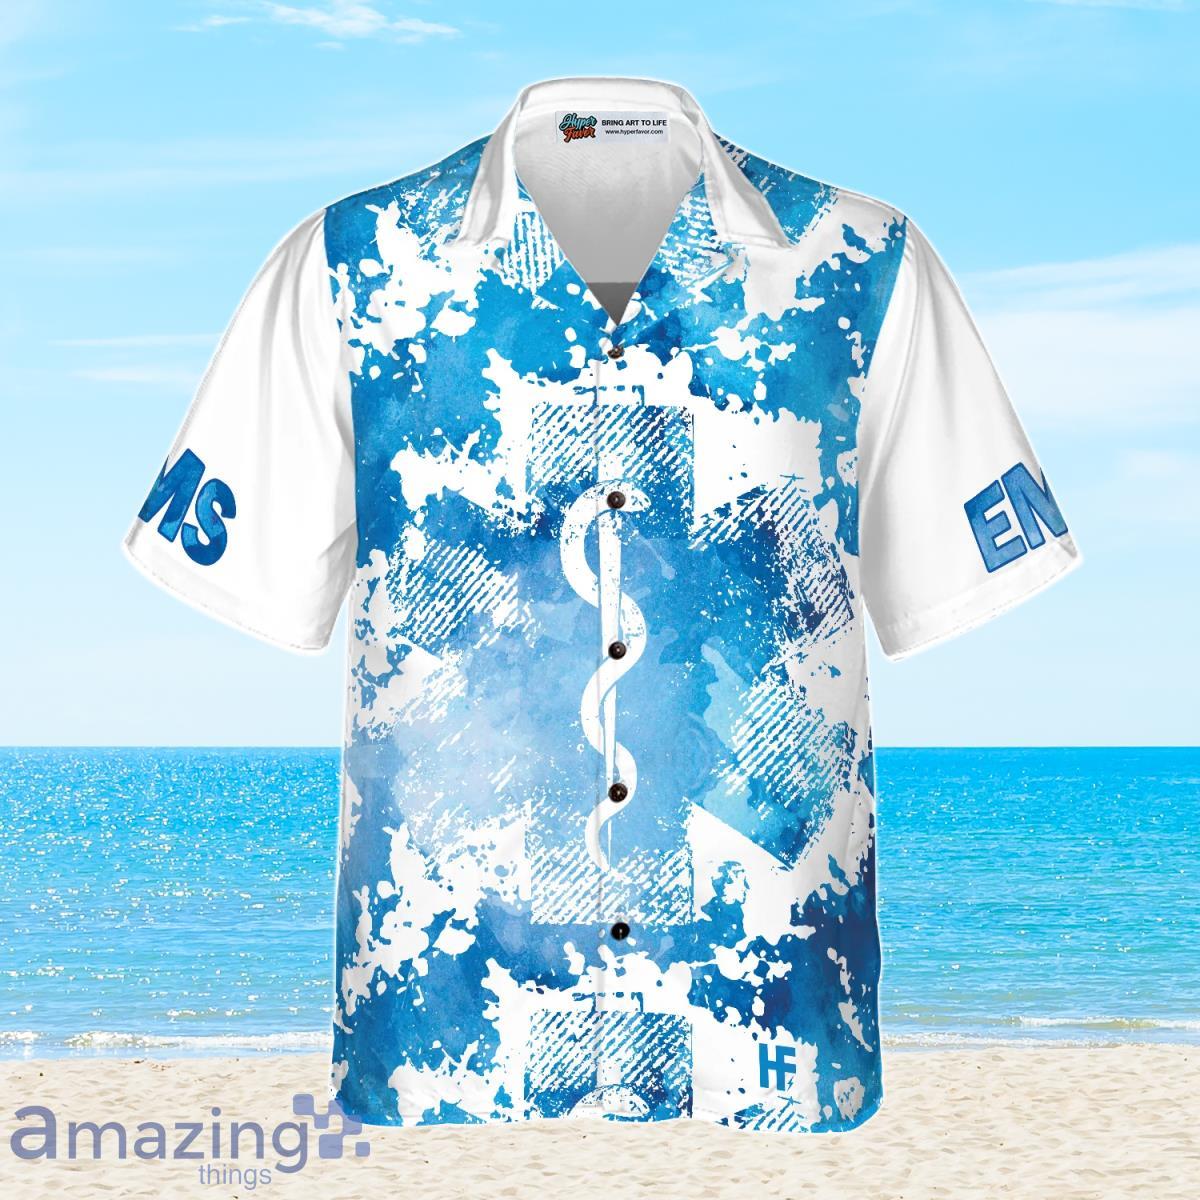 Here's Where to Buy an Authentic Hawaiian Shirt